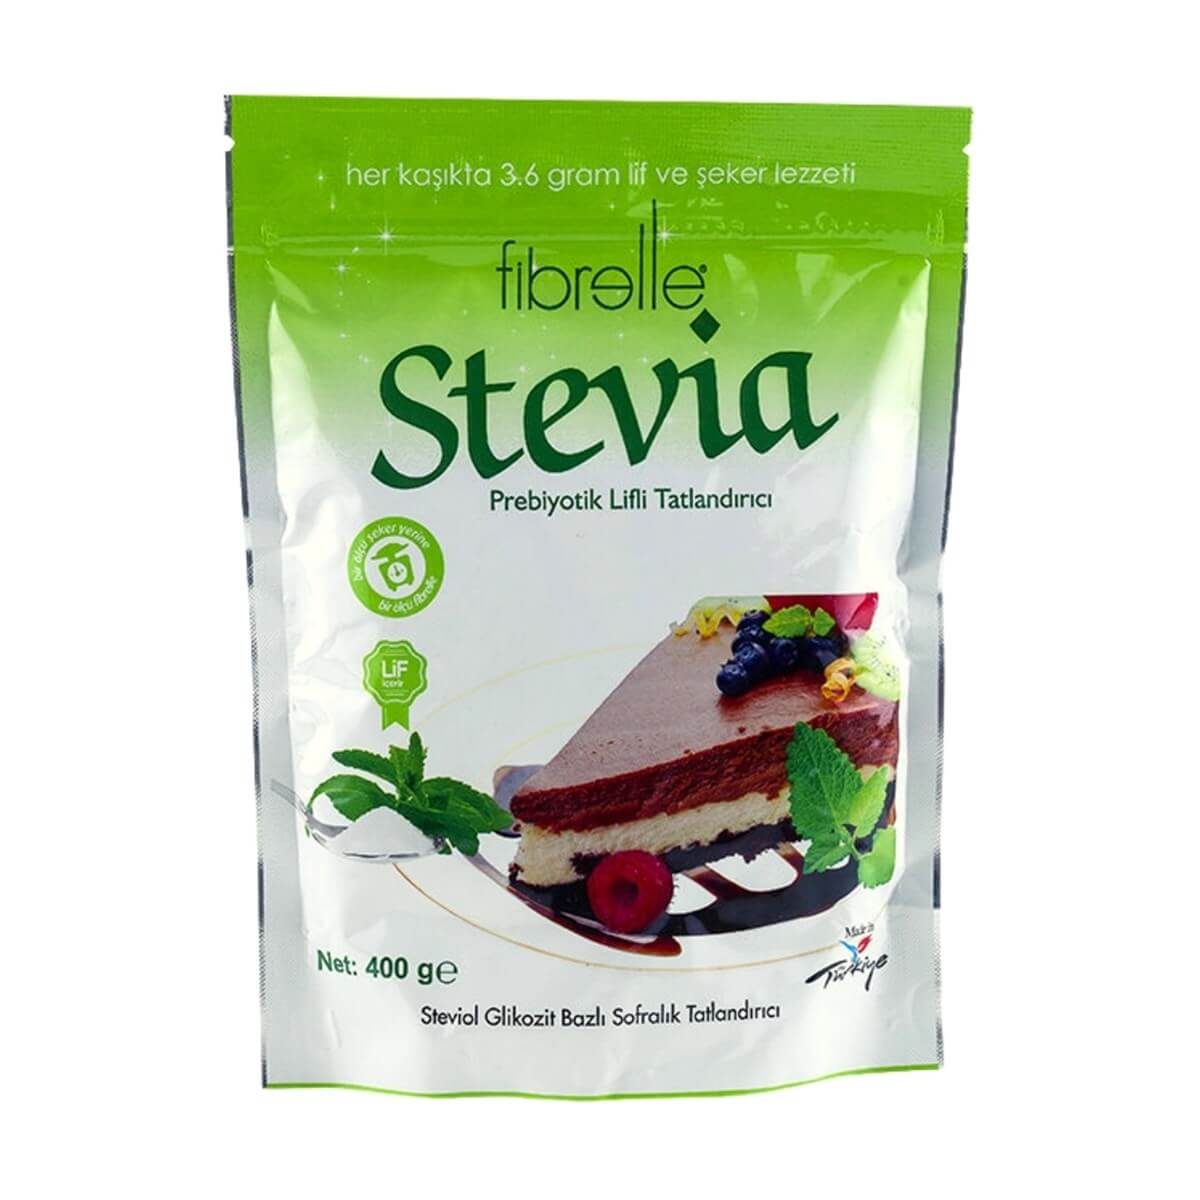 Fibrelle Stevia Prebiyotik Lifli Tatlandırıcı 400 Gr